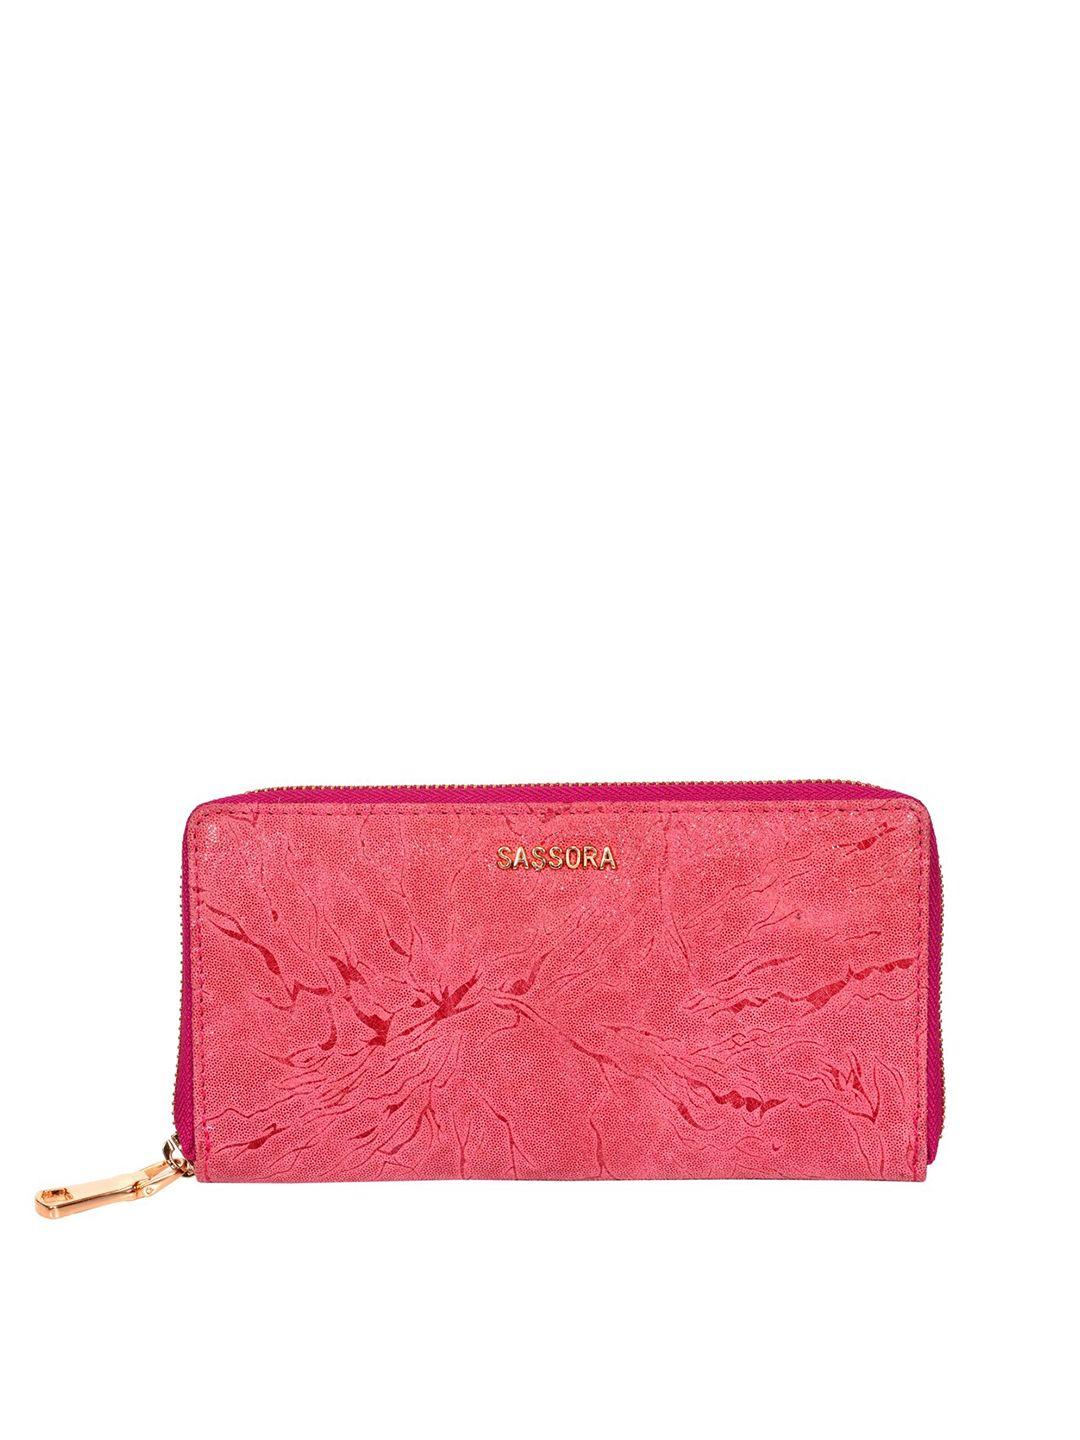 sassora women pink abstract printed leather zip around wallet